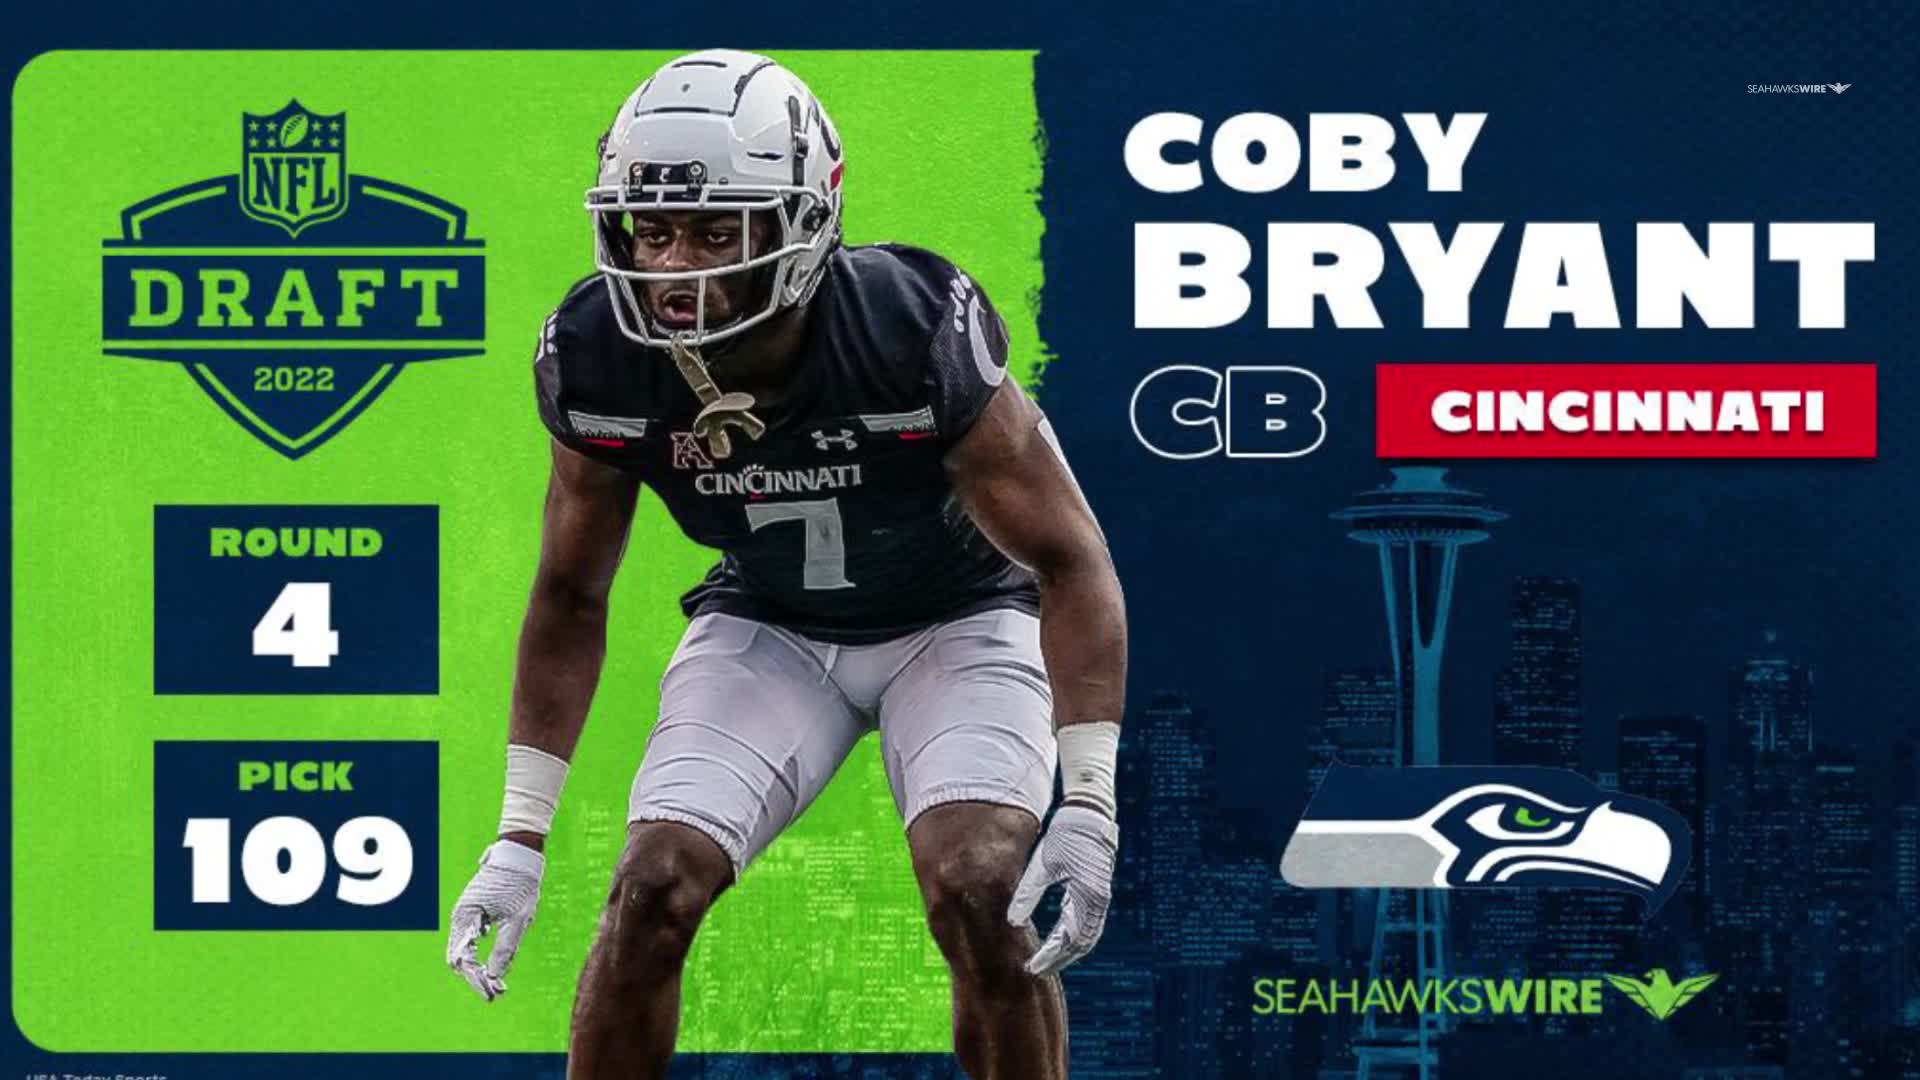 Seahawks pick Cincinnati CB Coby Bryant at No. 109 overall